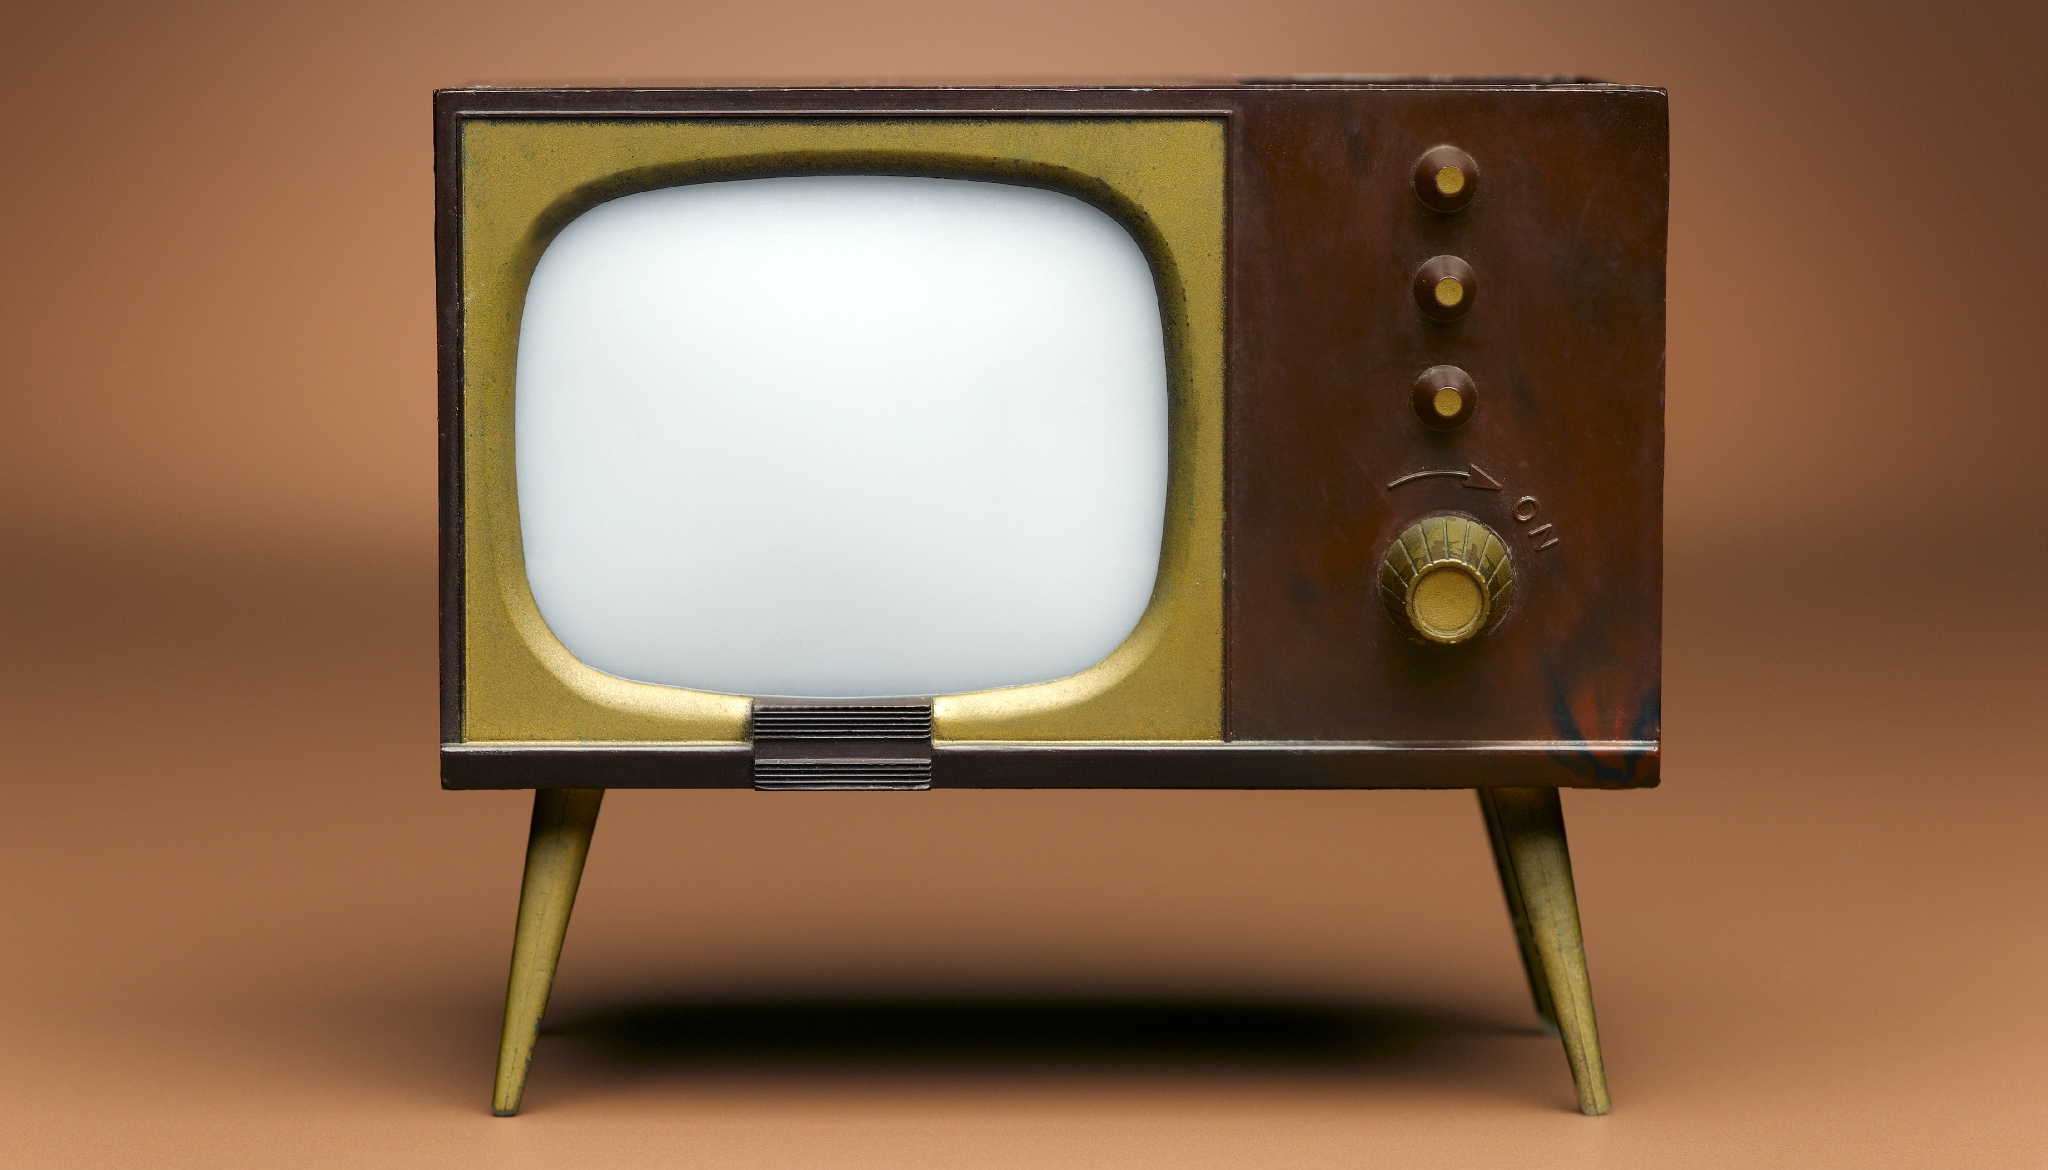 Телевизор 20 минут. Старинный телевизор. Необычные телевизоры. Телевизор в прошлом. Древний телевизор.